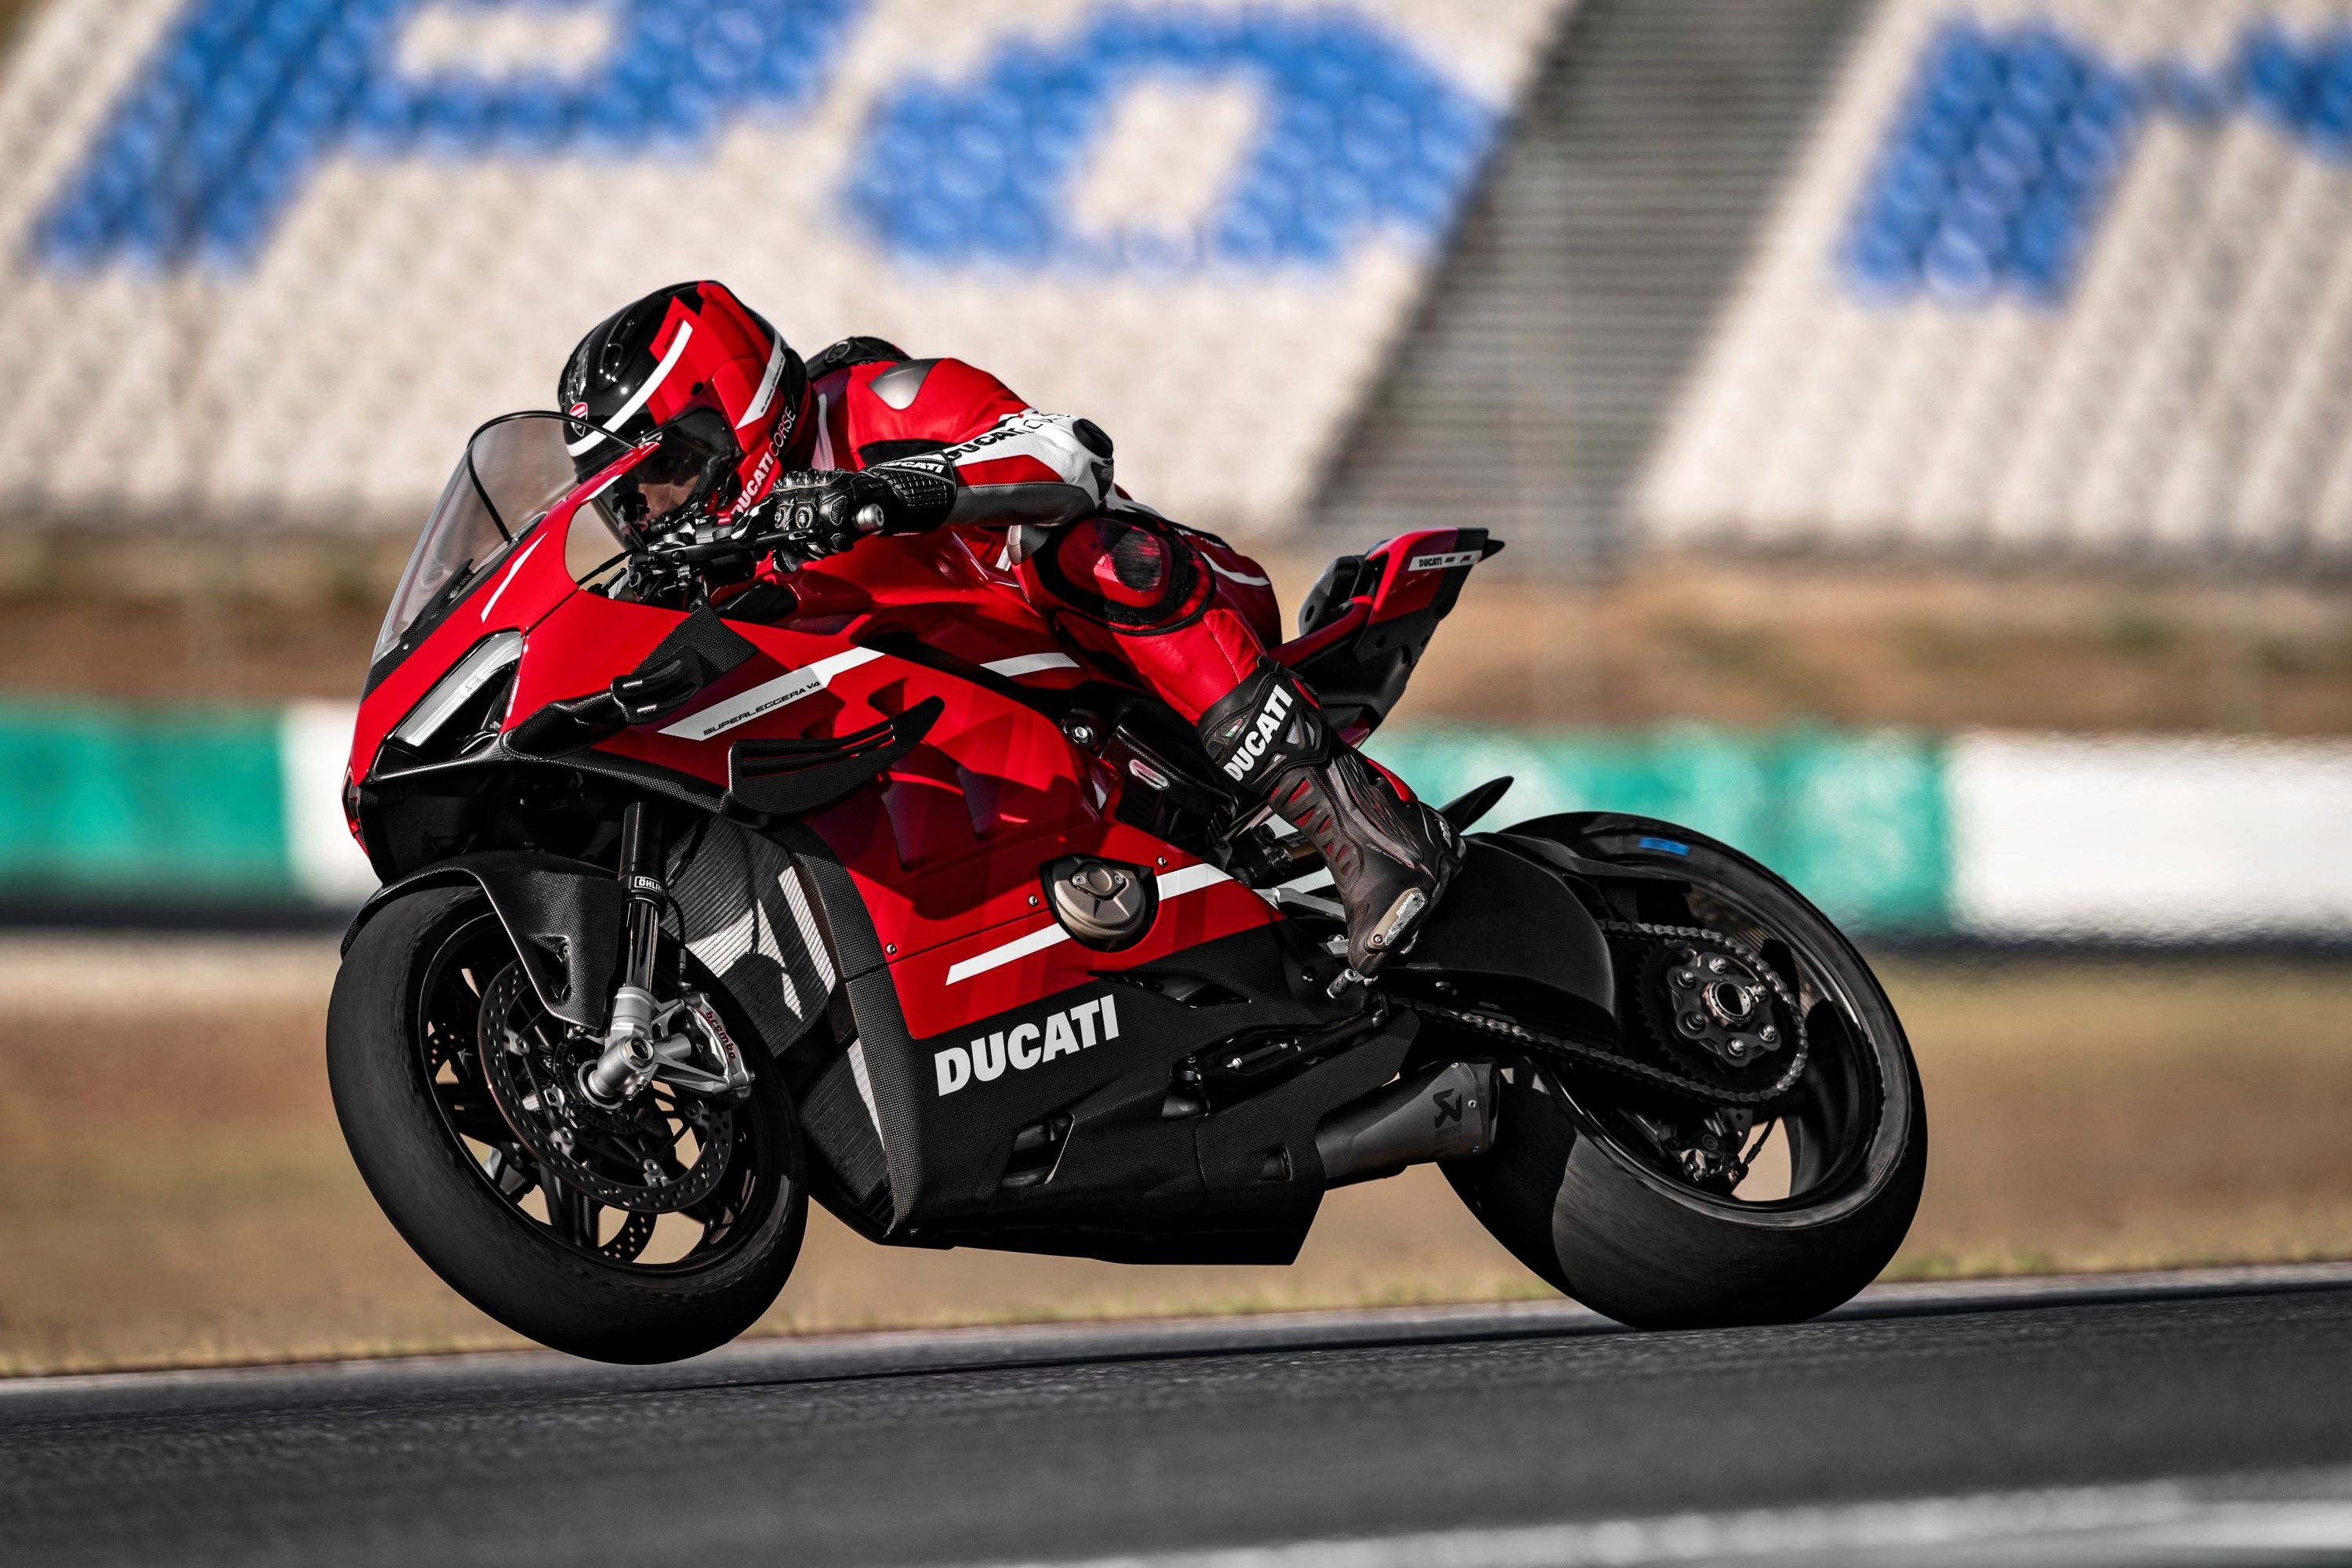 Ducati Panigale V4 riding shot